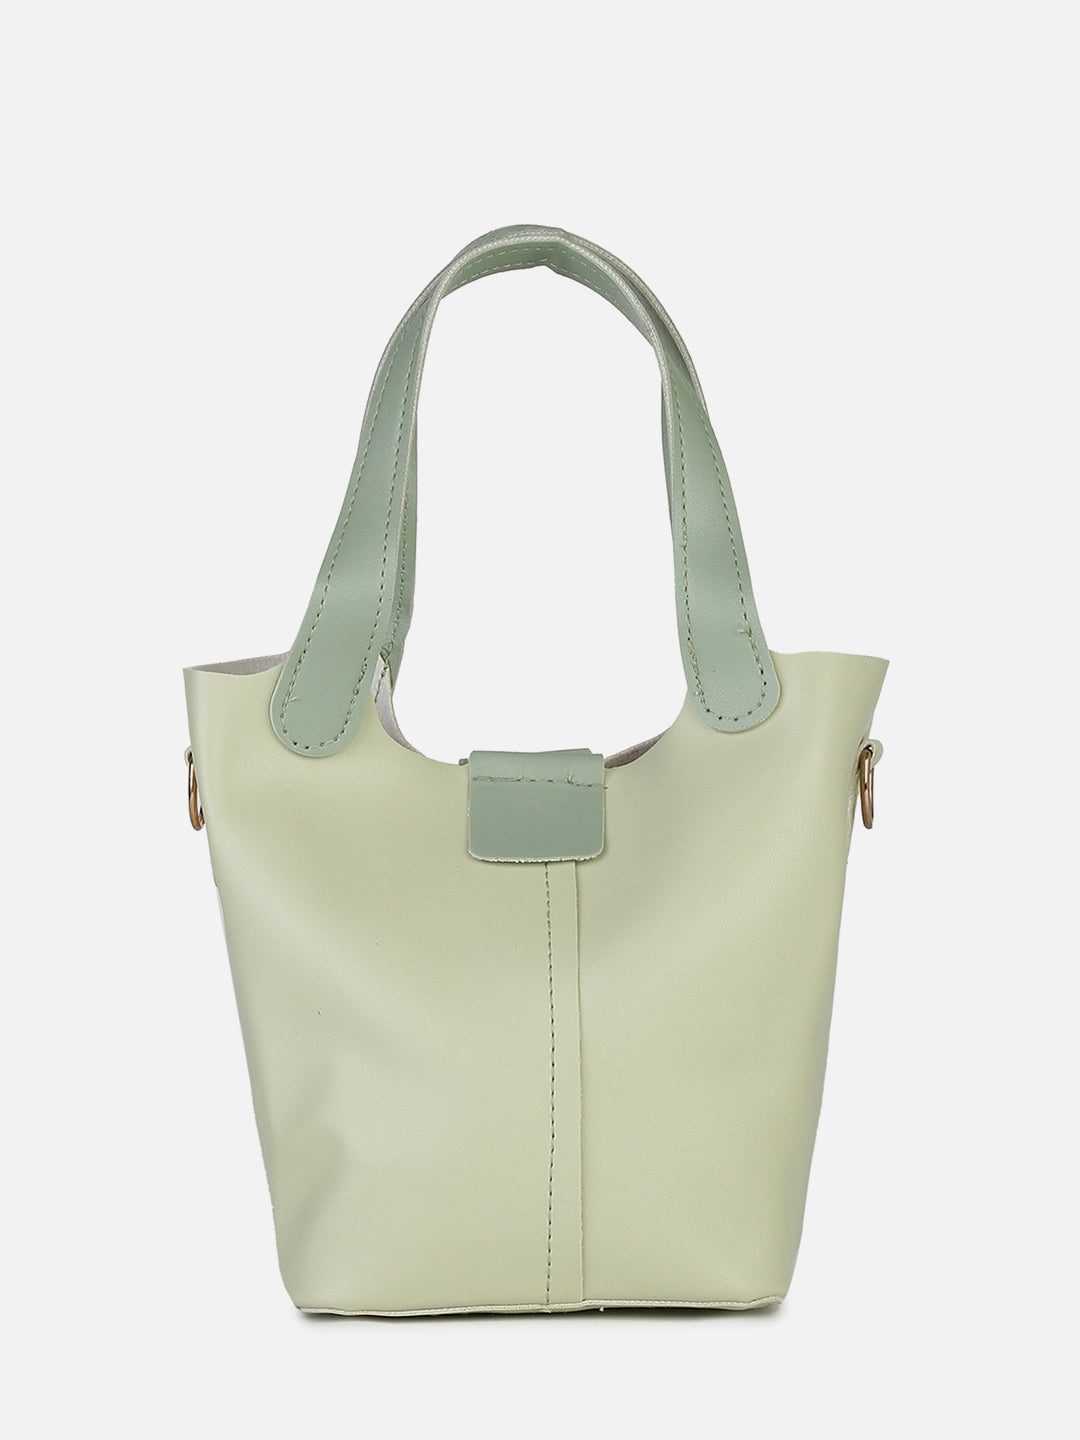 Caroline Mint Green Tote Bag